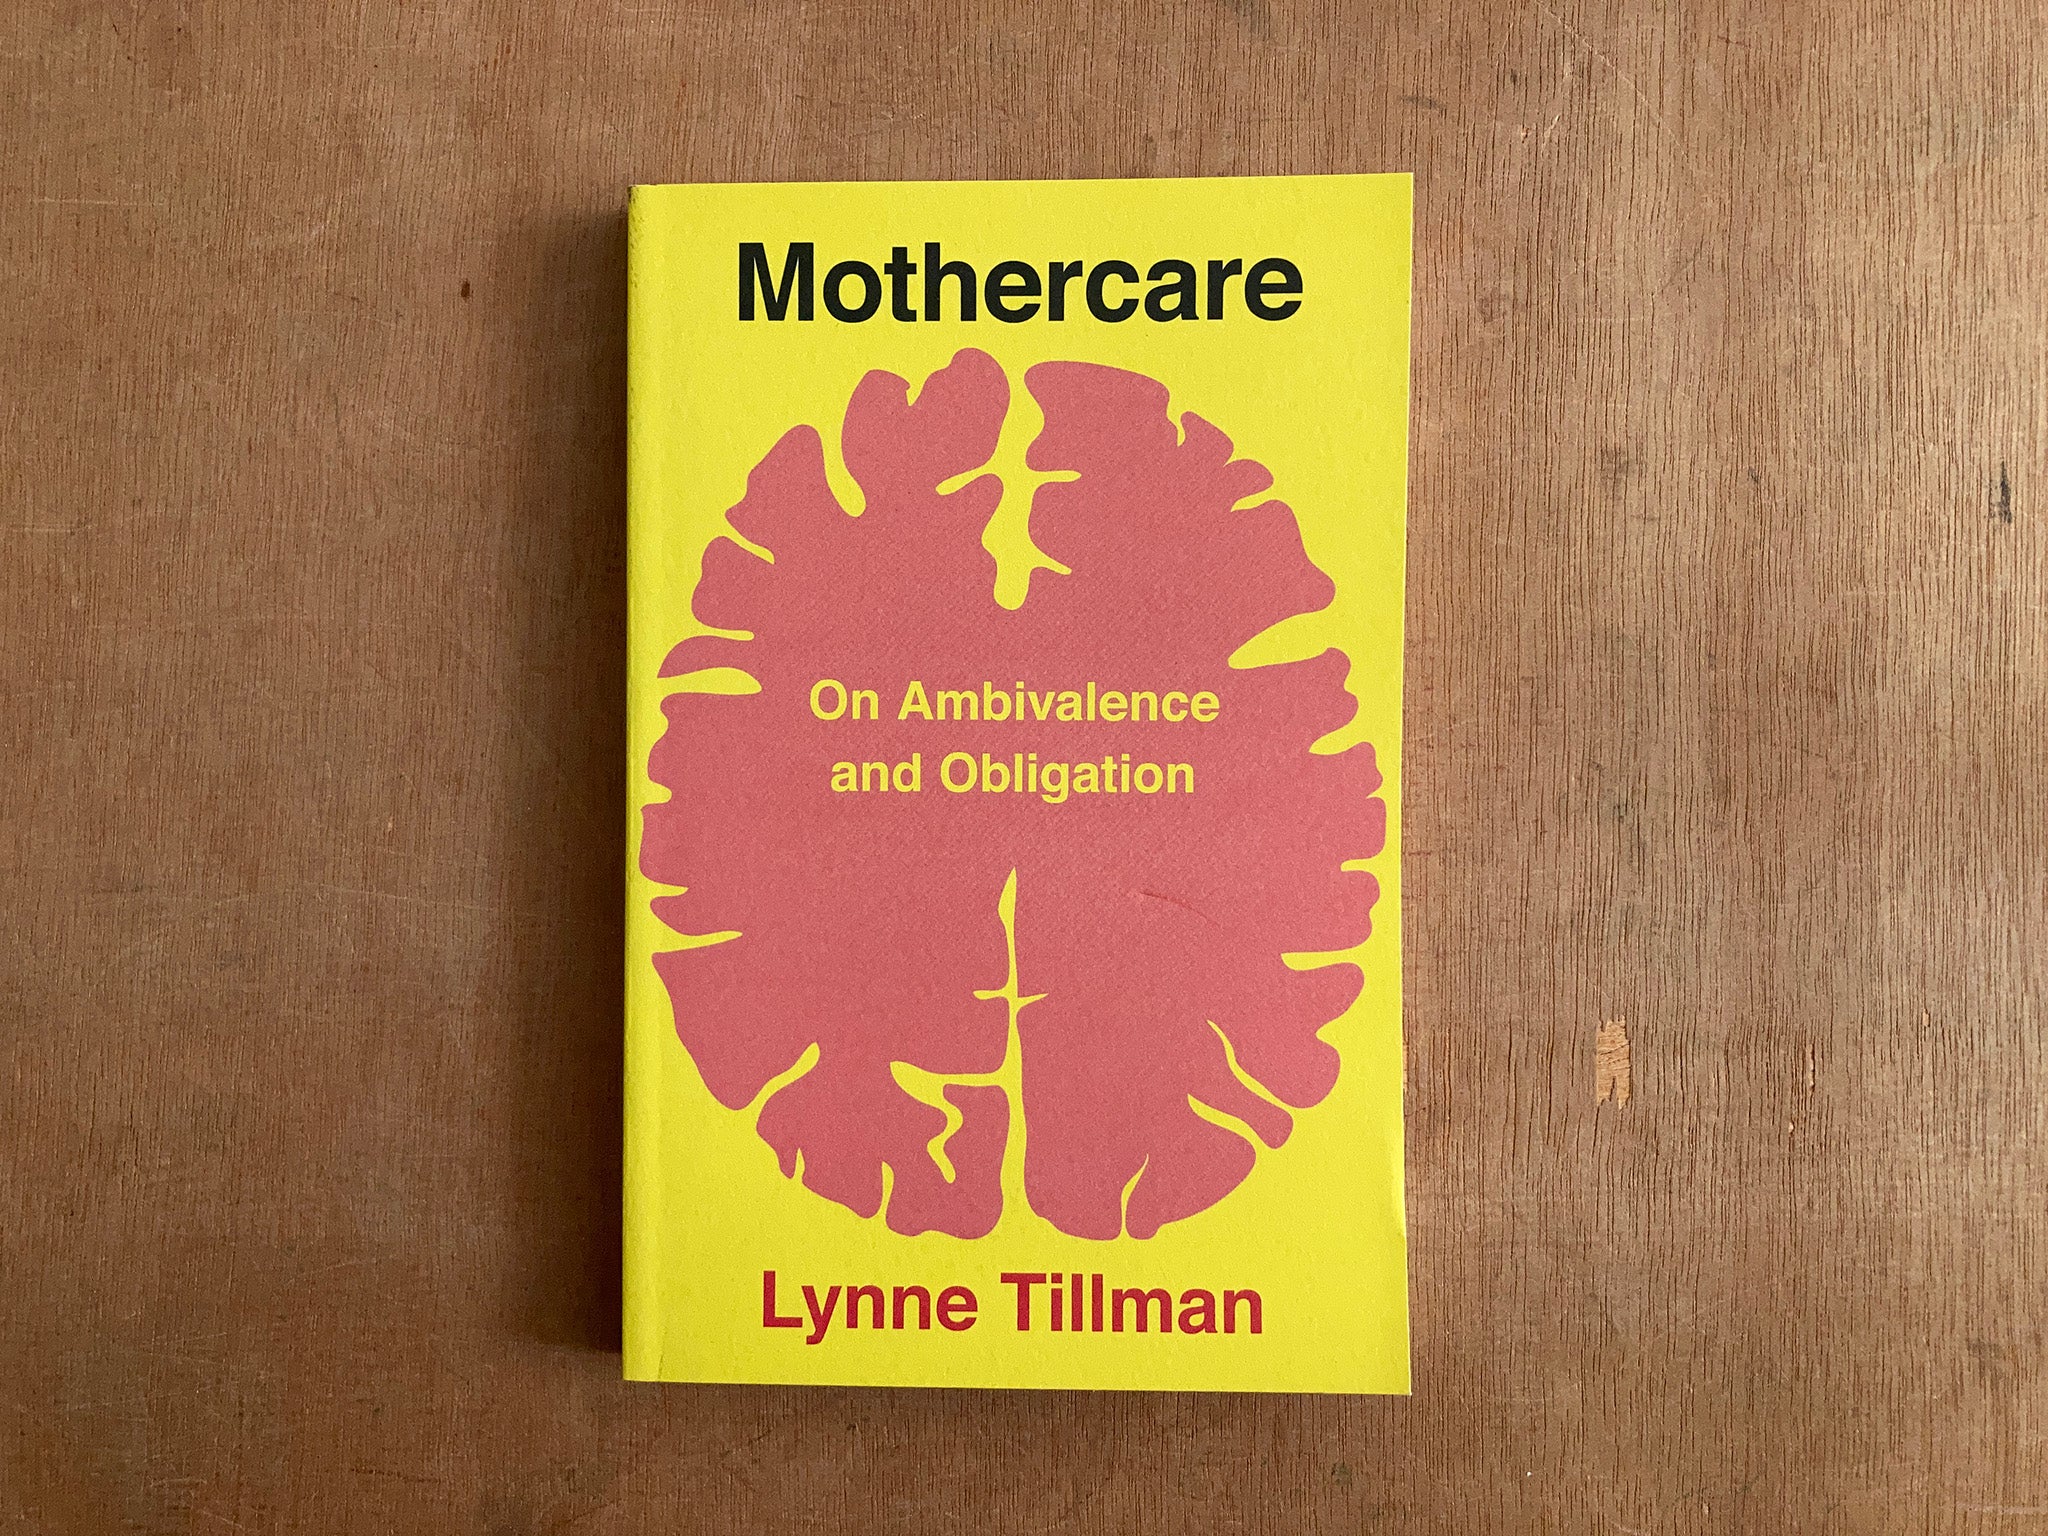 MOTHERCARE by Lynne Tillman